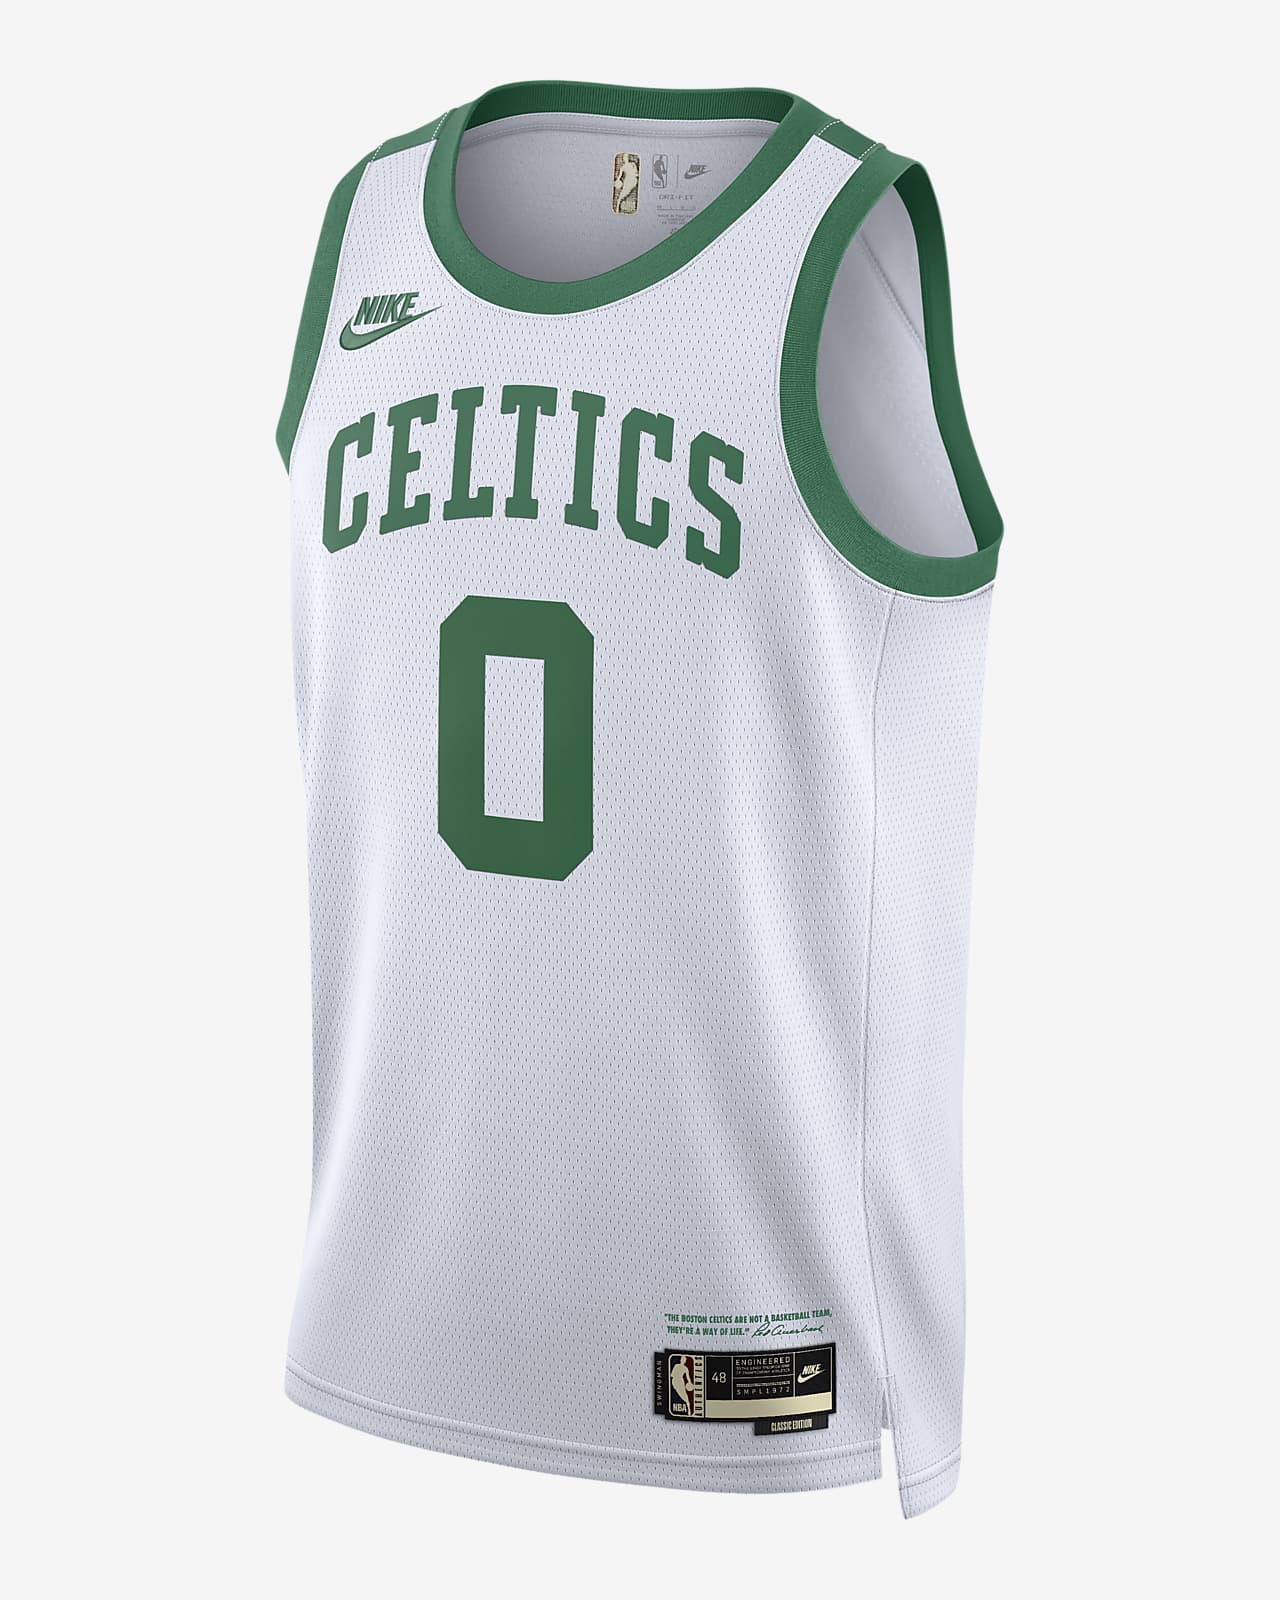 Boston Celtics Classic Edition Nike Dri-FIT NBA Swingman Jersey